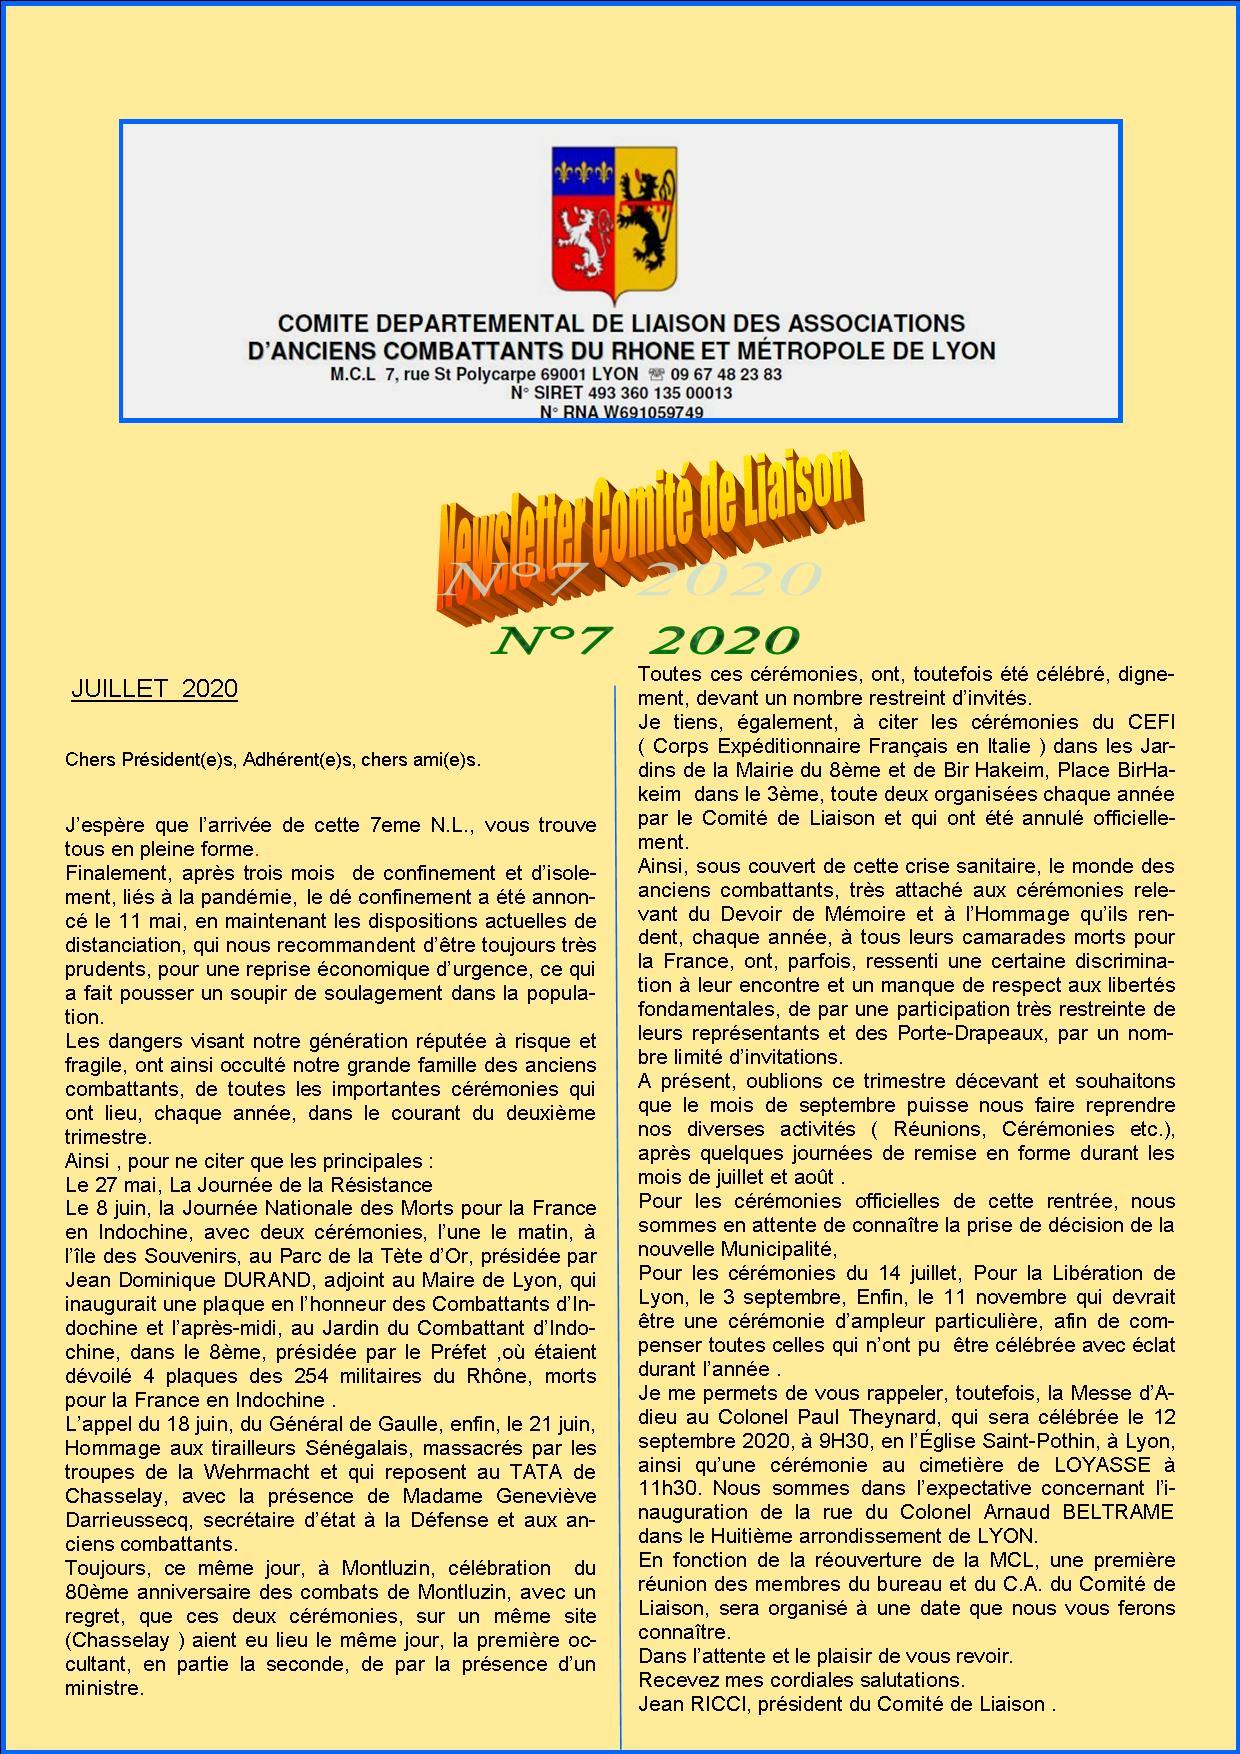 Newsletter comite de liaisonn 7 2020